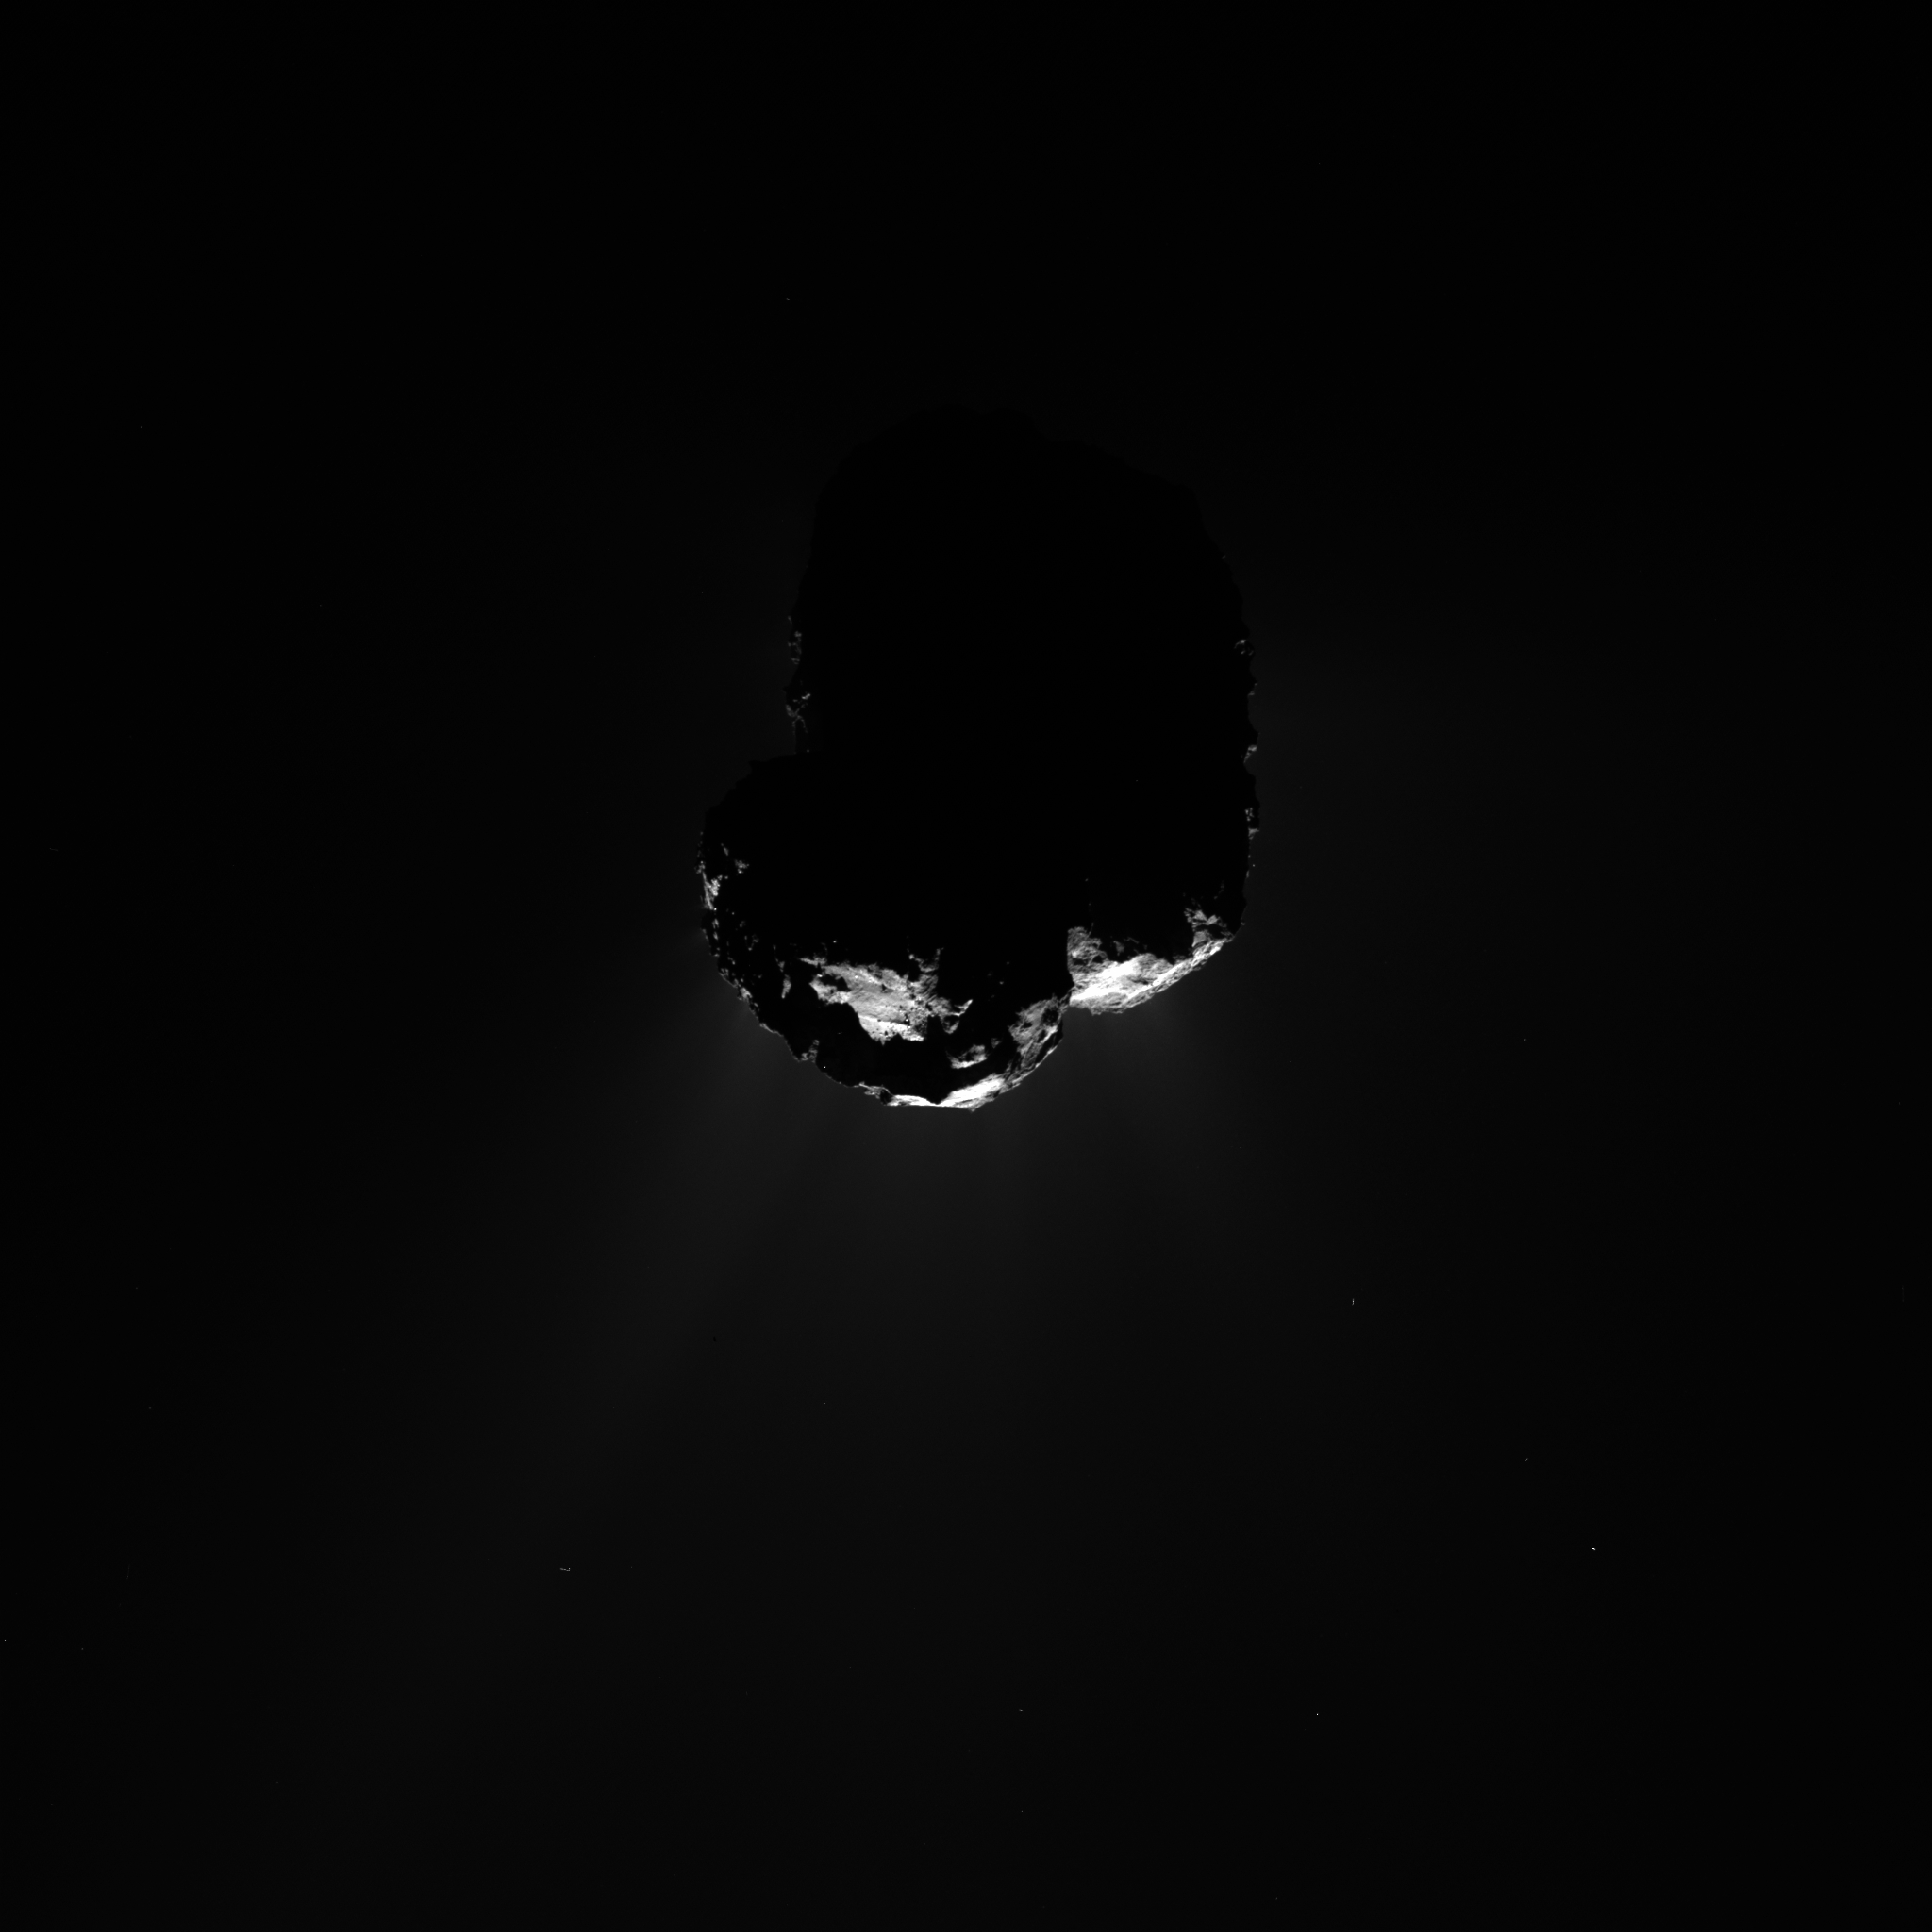 Comet outburst 12 September 2015